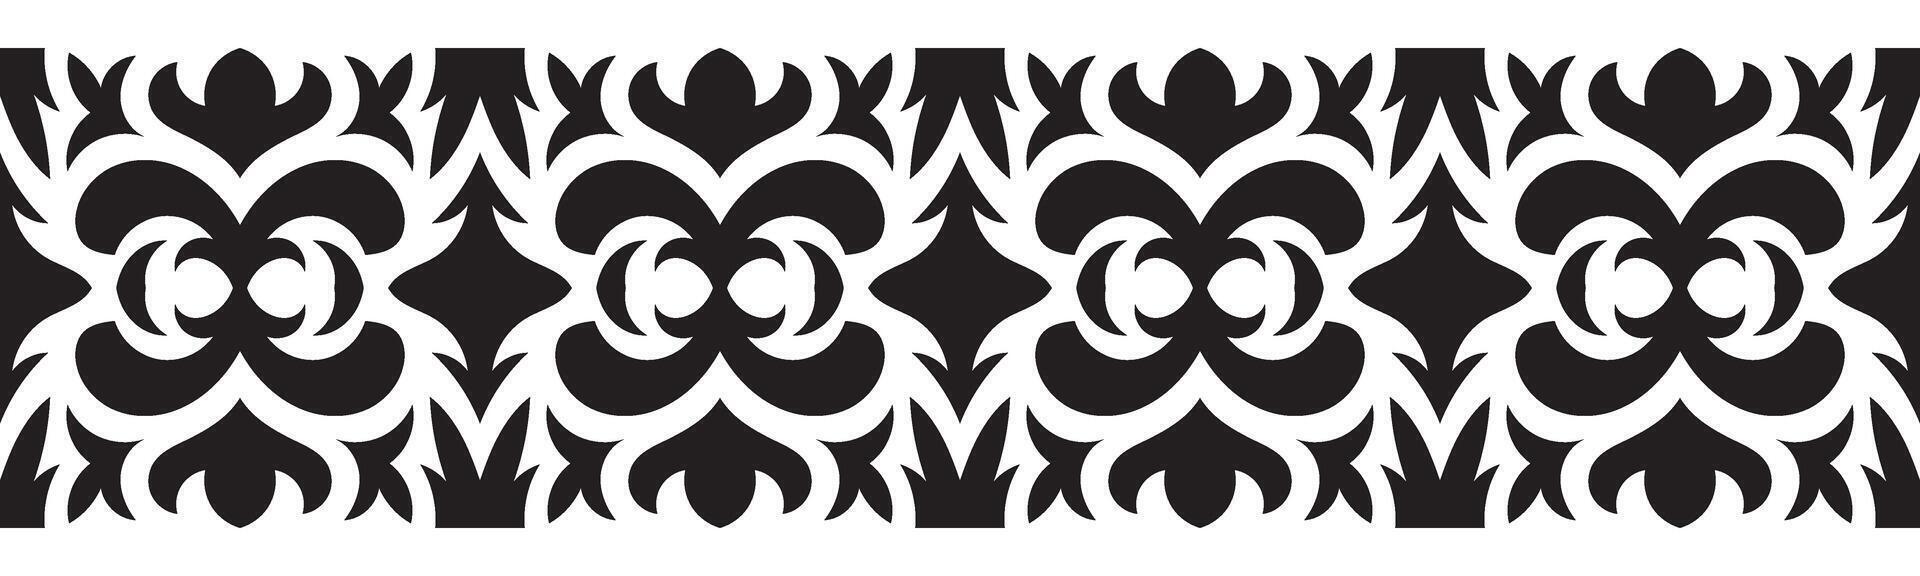 Ethnic seamless border pattern. Ornament vector illustration. Classic ornate element. Baroque floral vintage style. Decorative border design for frame, textile, fabric, clothing, carpet, curtain, rug.